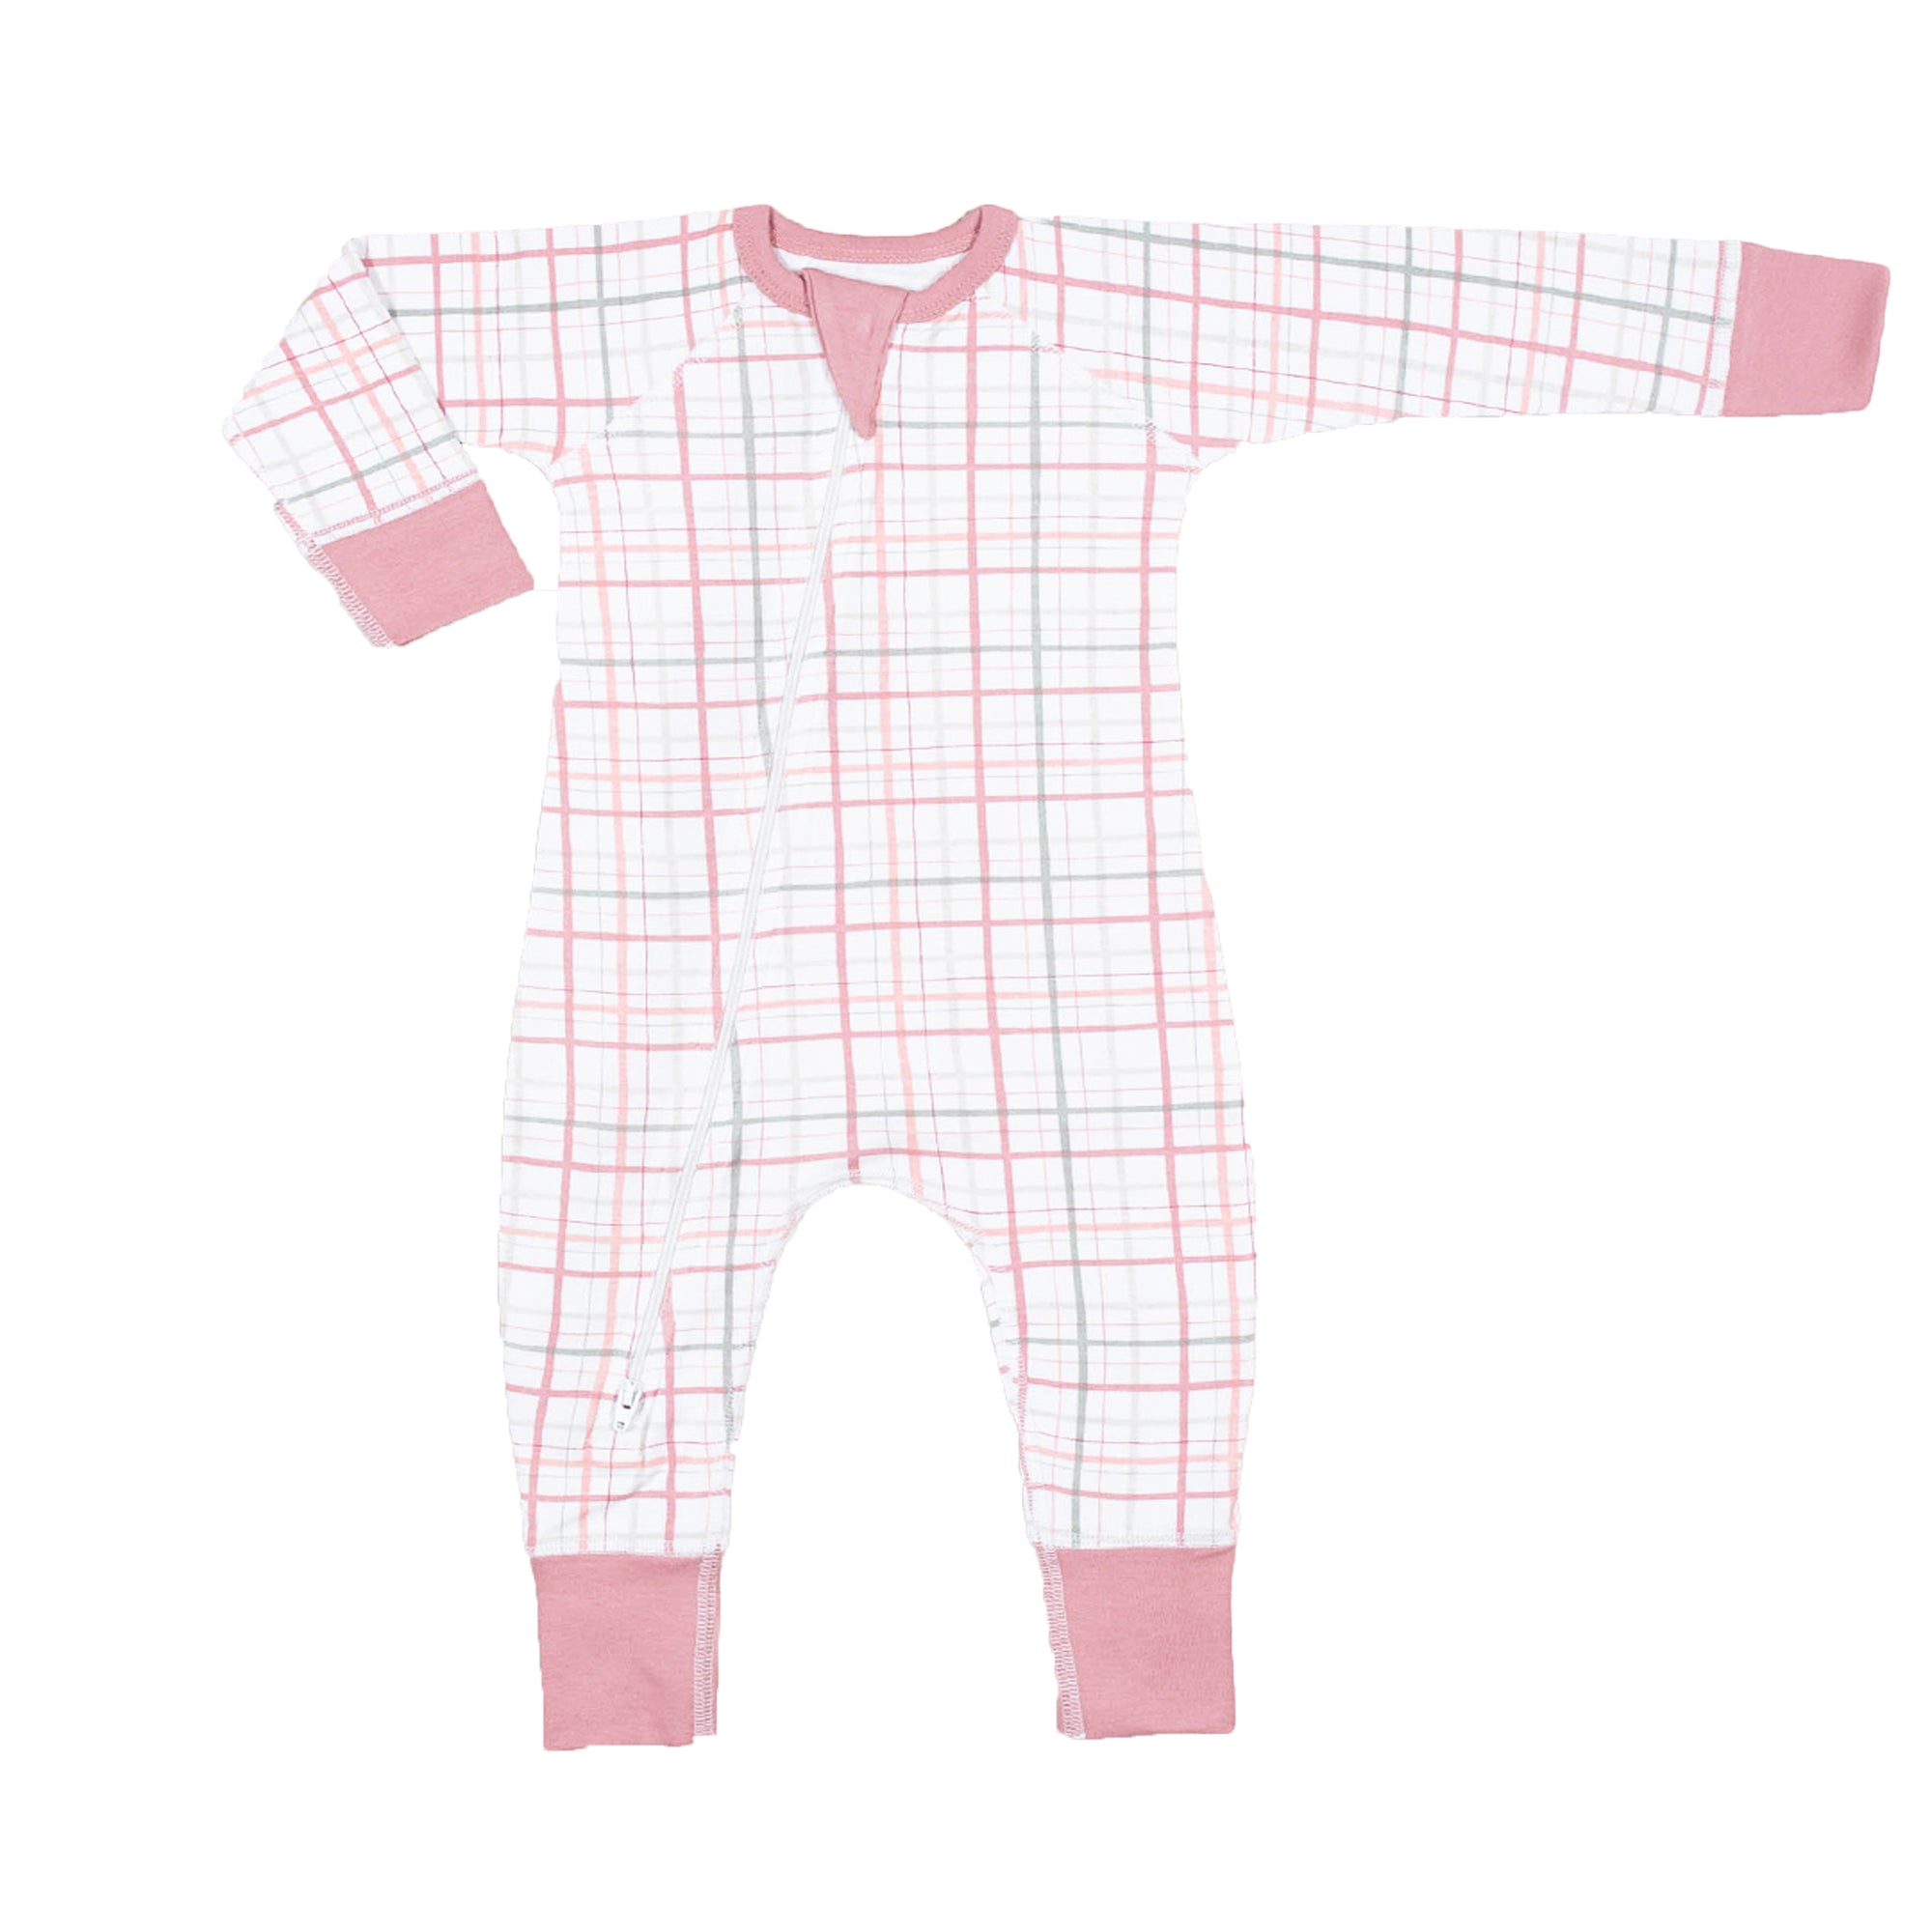 saplingchild organic cotton baby wear plaid pink zip romper babygirl clothes